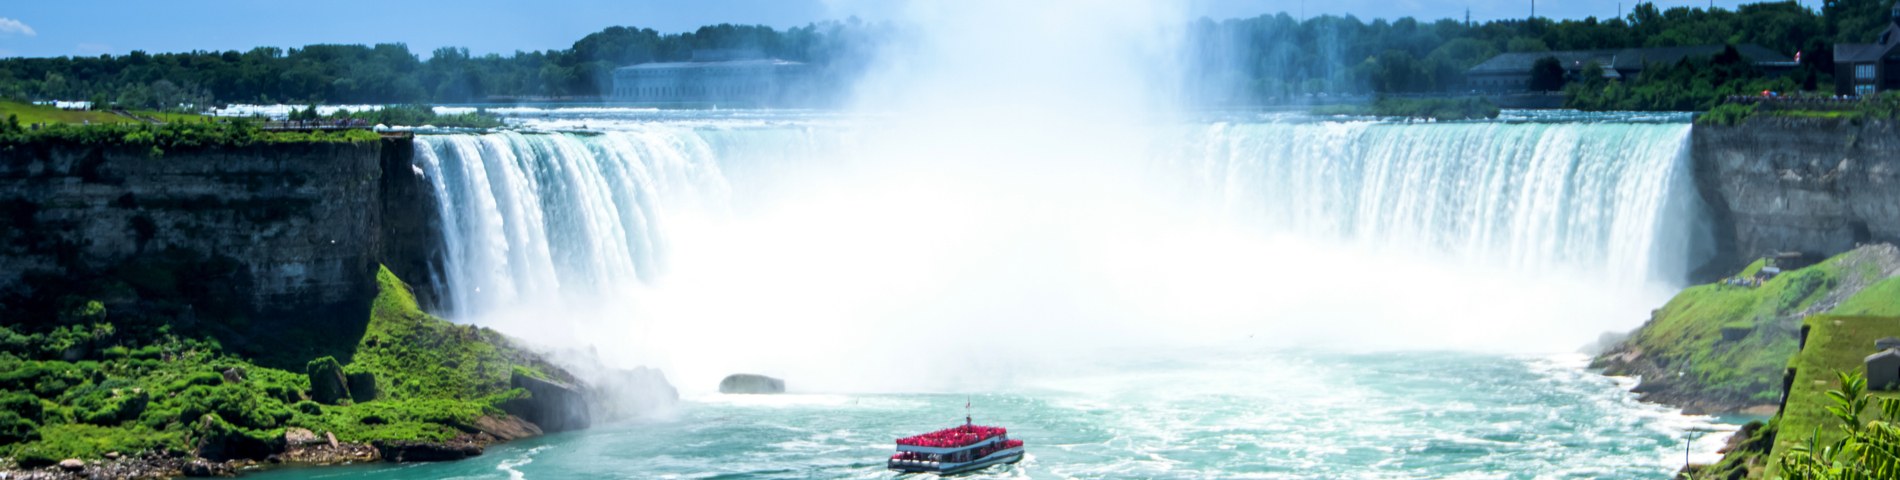 Welland (Niagara Watervallen)